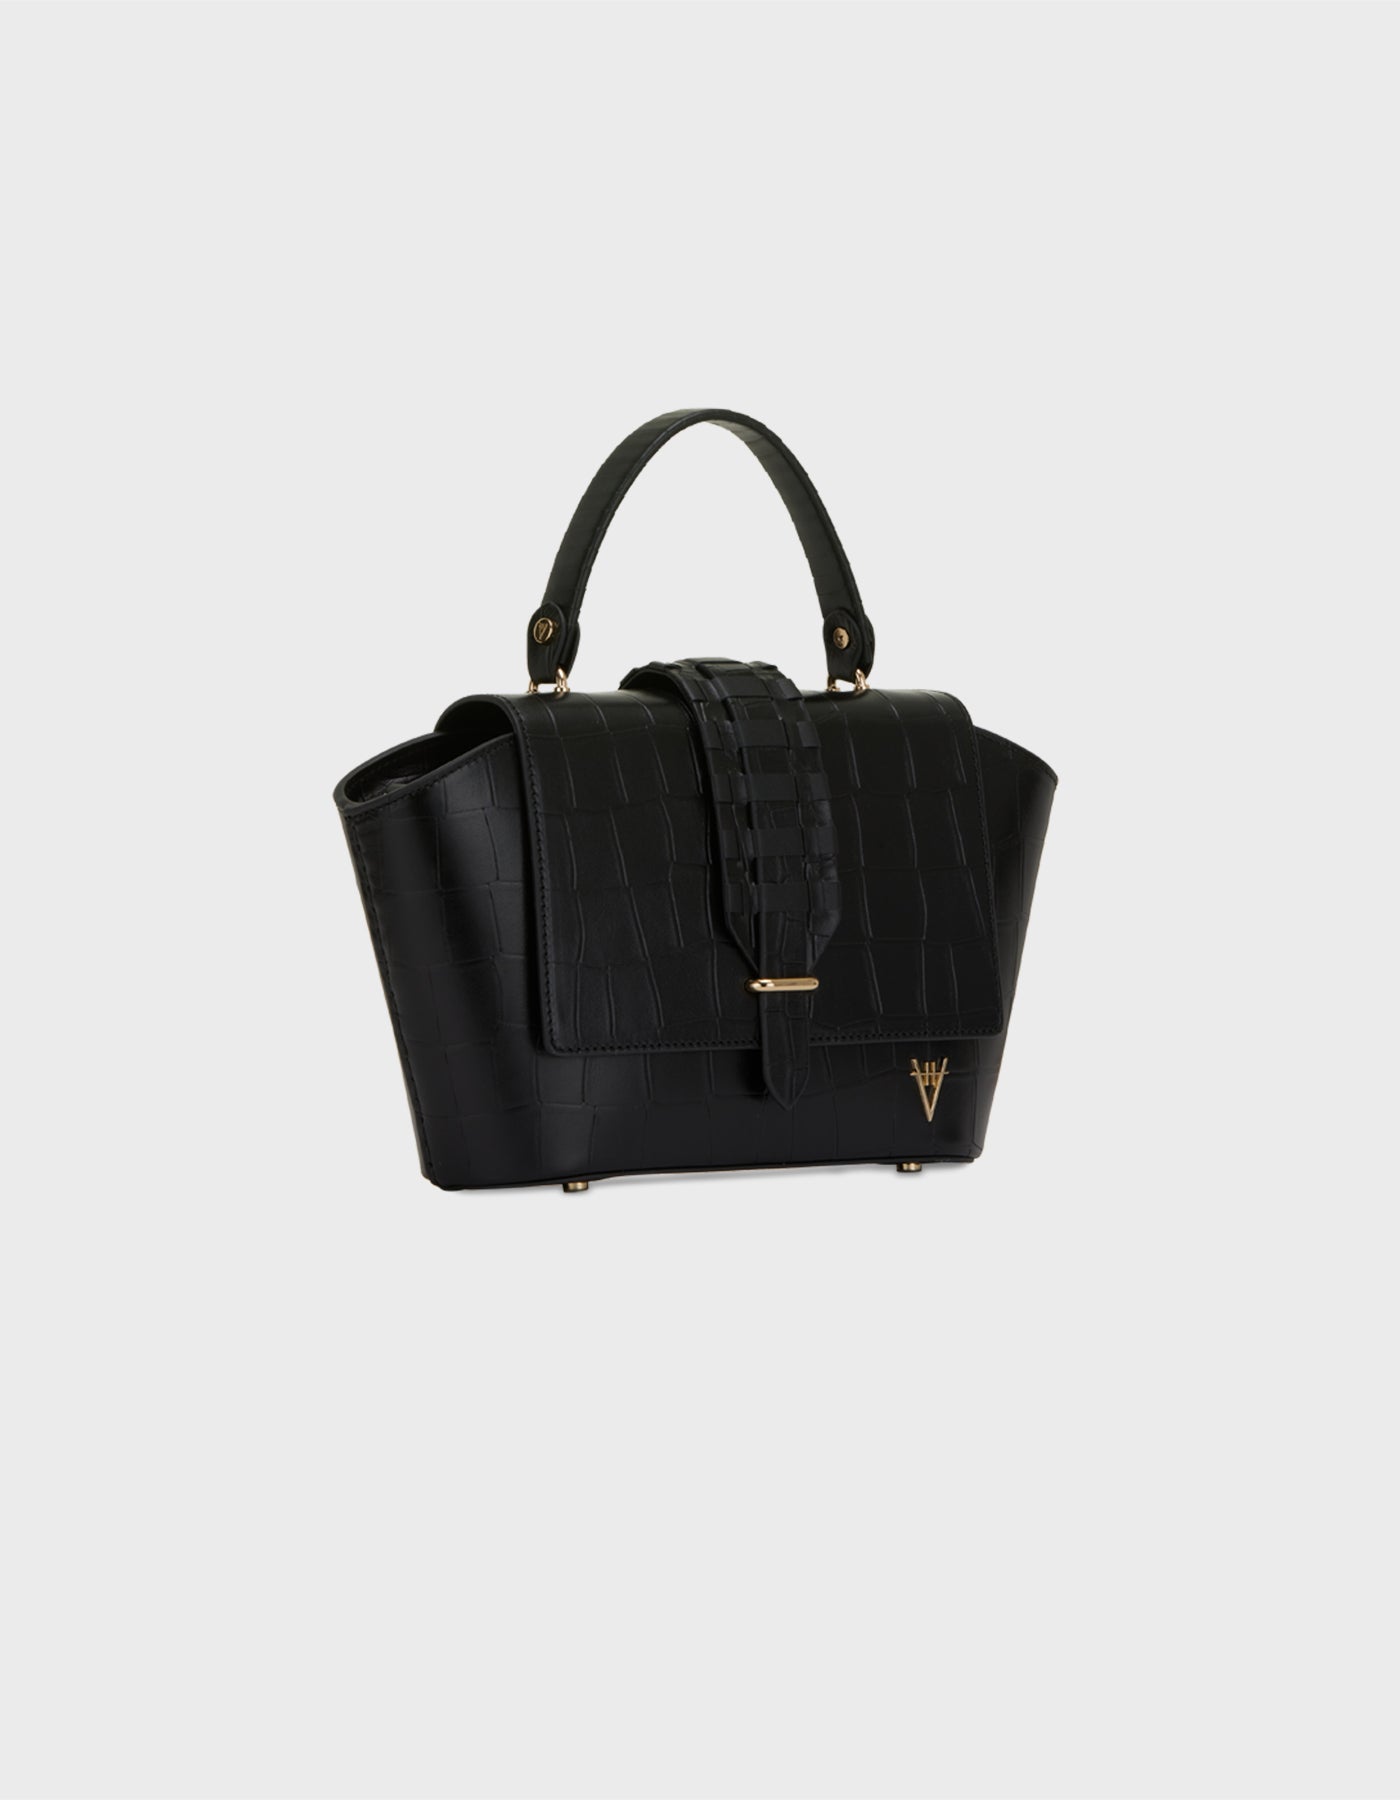 HiVa Atelier | Ventus Shoulder Bag Croco Effect Black | Beautiful and Versatile